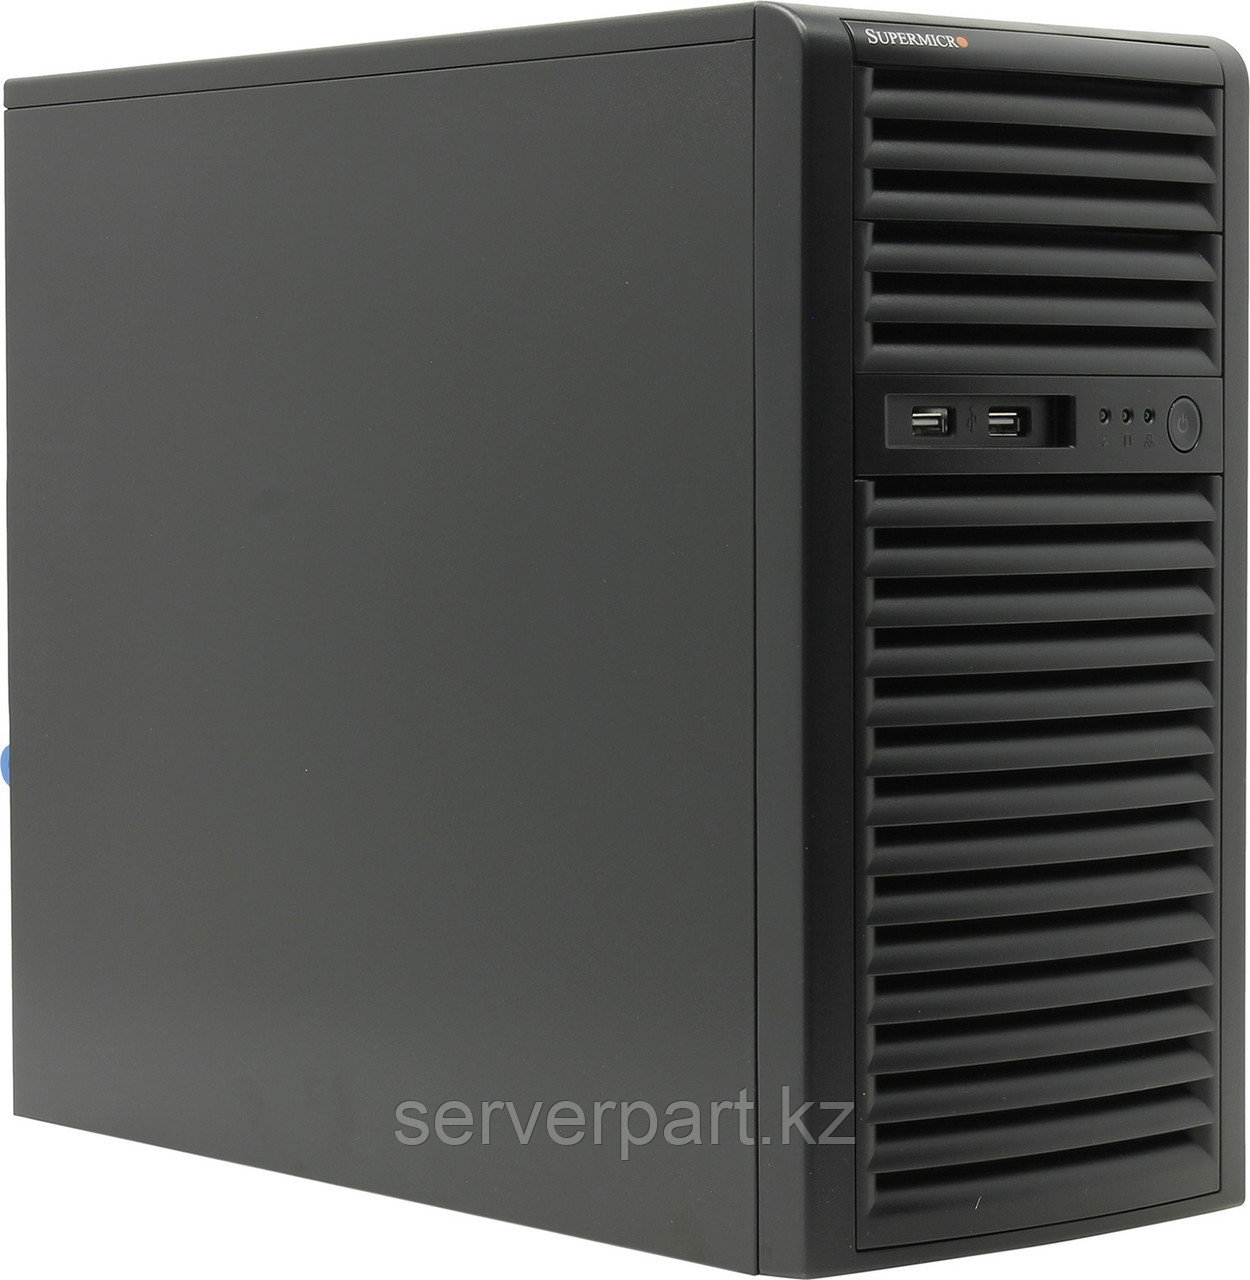 Сервер Supermicro SYS-5039C (Tower 4LFF)/4-core intel xeon E2224 (3.4GHz)/64GB EUDIMM